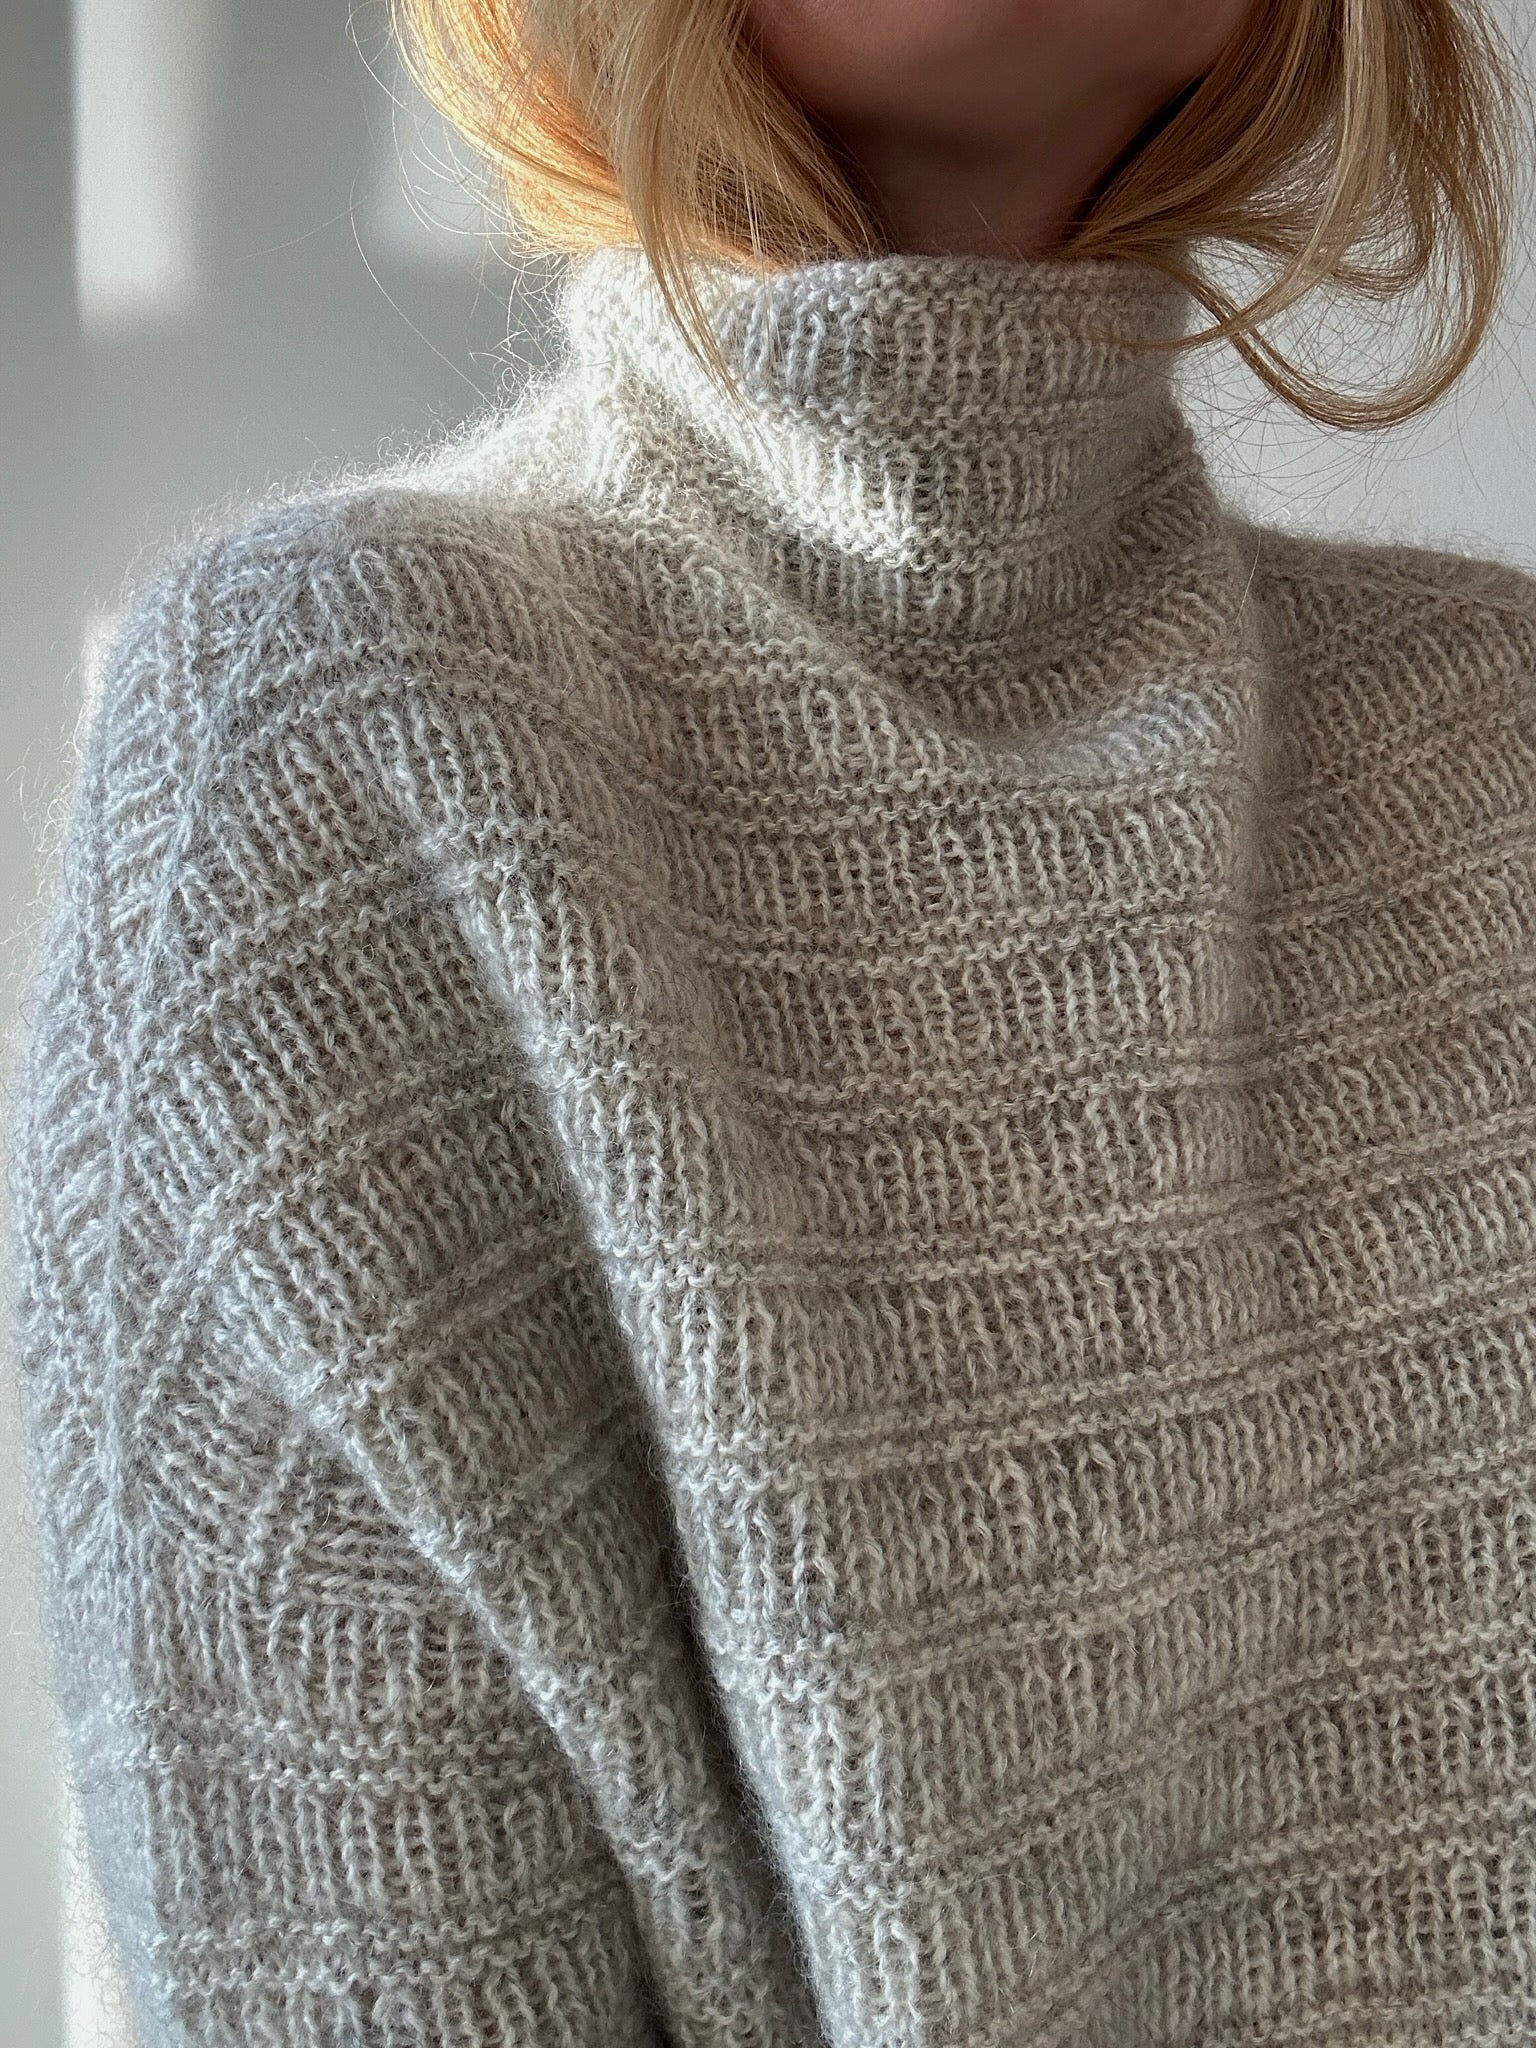 Sweater No. 28 My Favourite Things Knitwear - Strikkekit